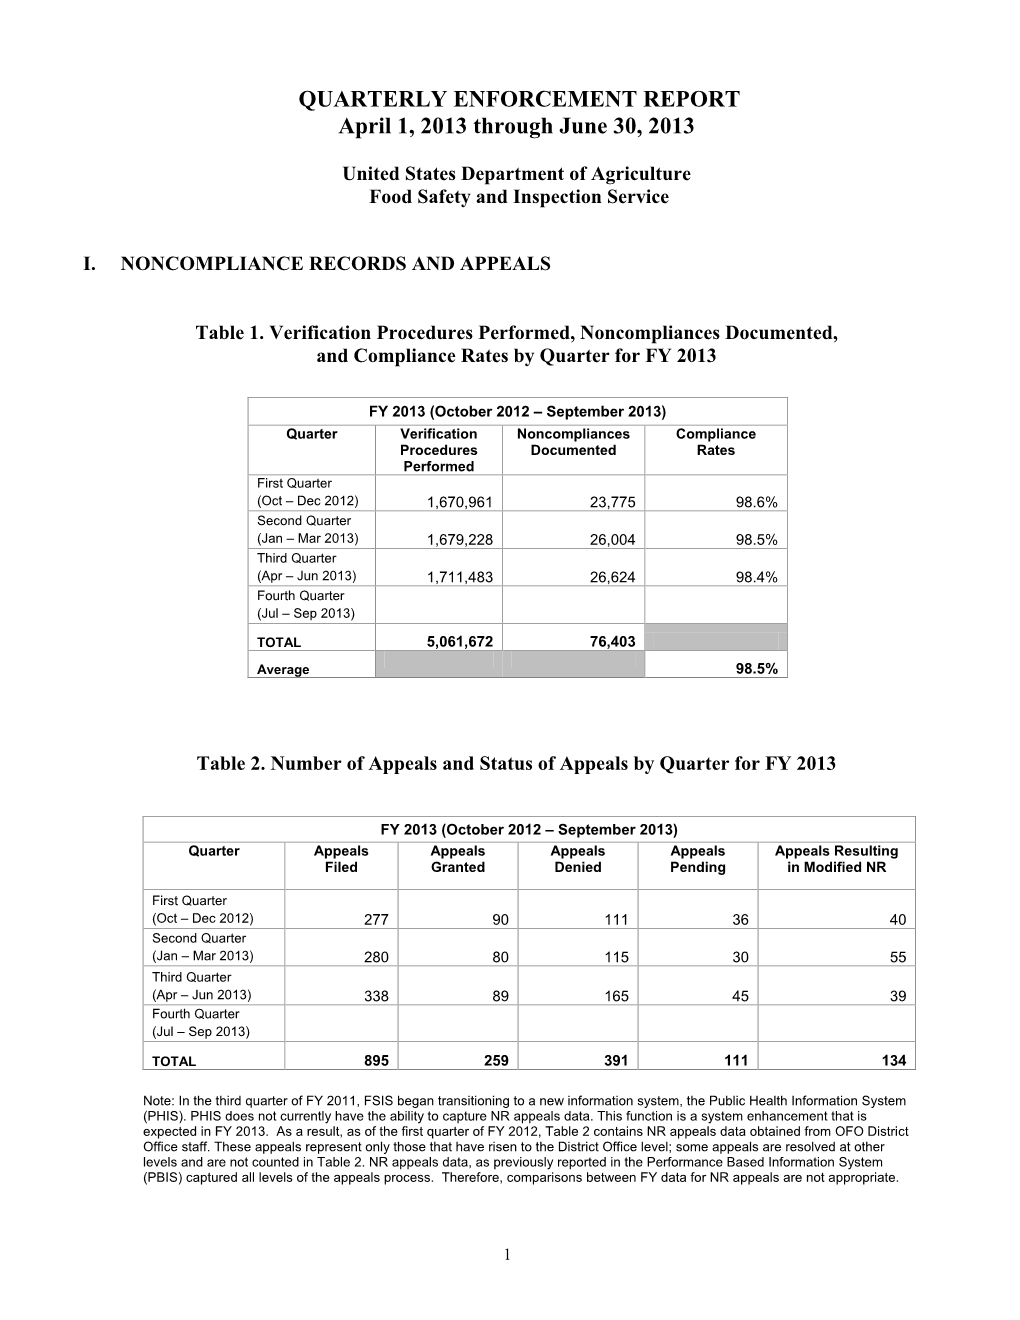 Quarterly Enforcement Report, Quarter 3, Fiscal Year 2013